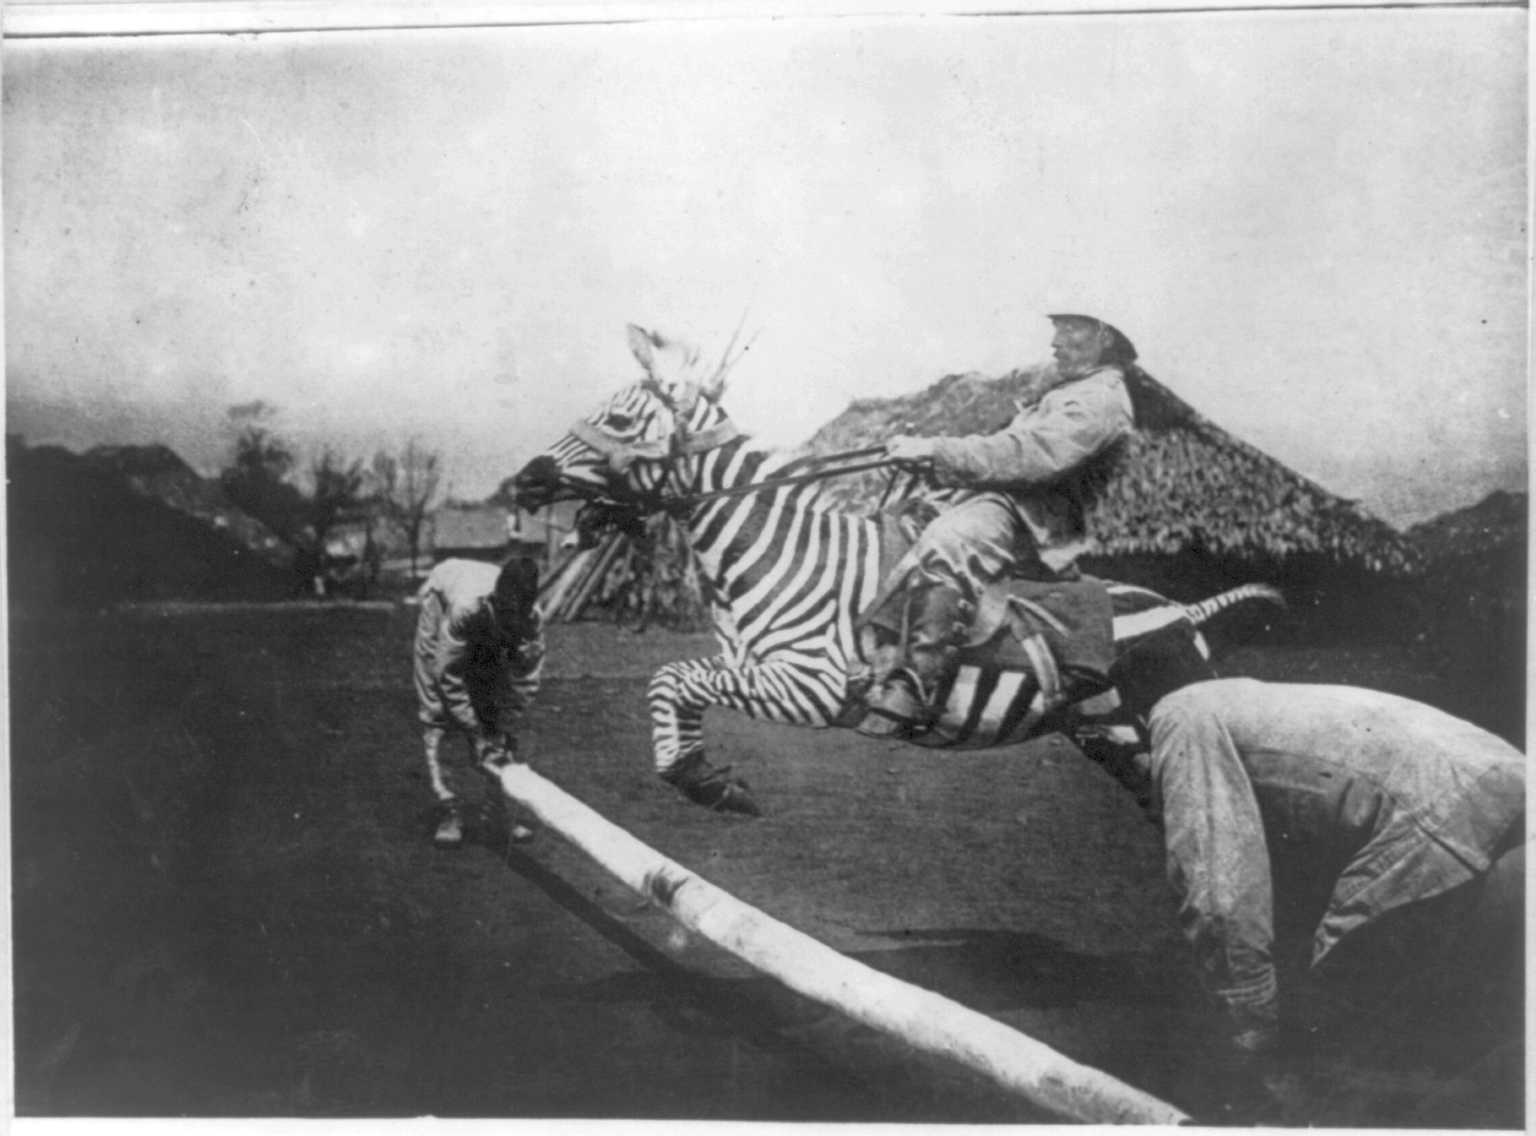 Zebra Horse Riding Funny Vintage Image